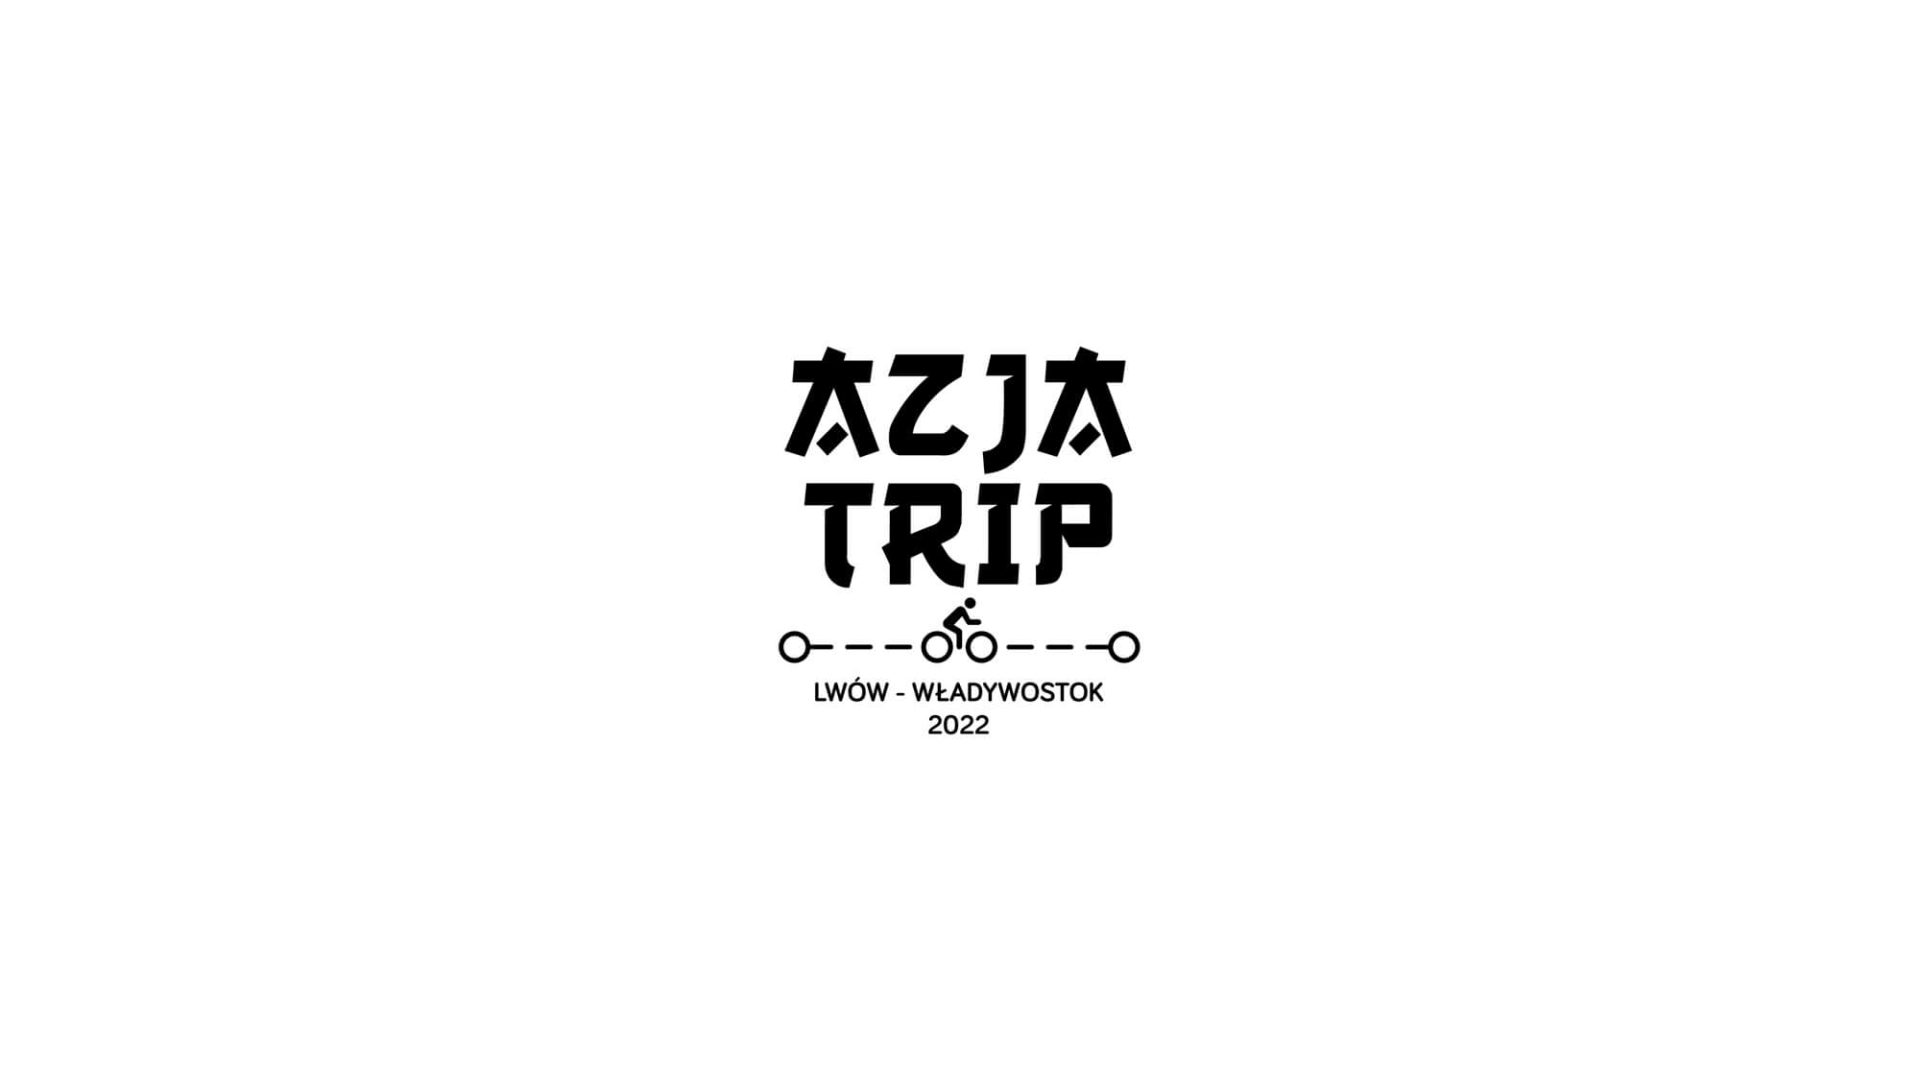 Azja Trip - logo